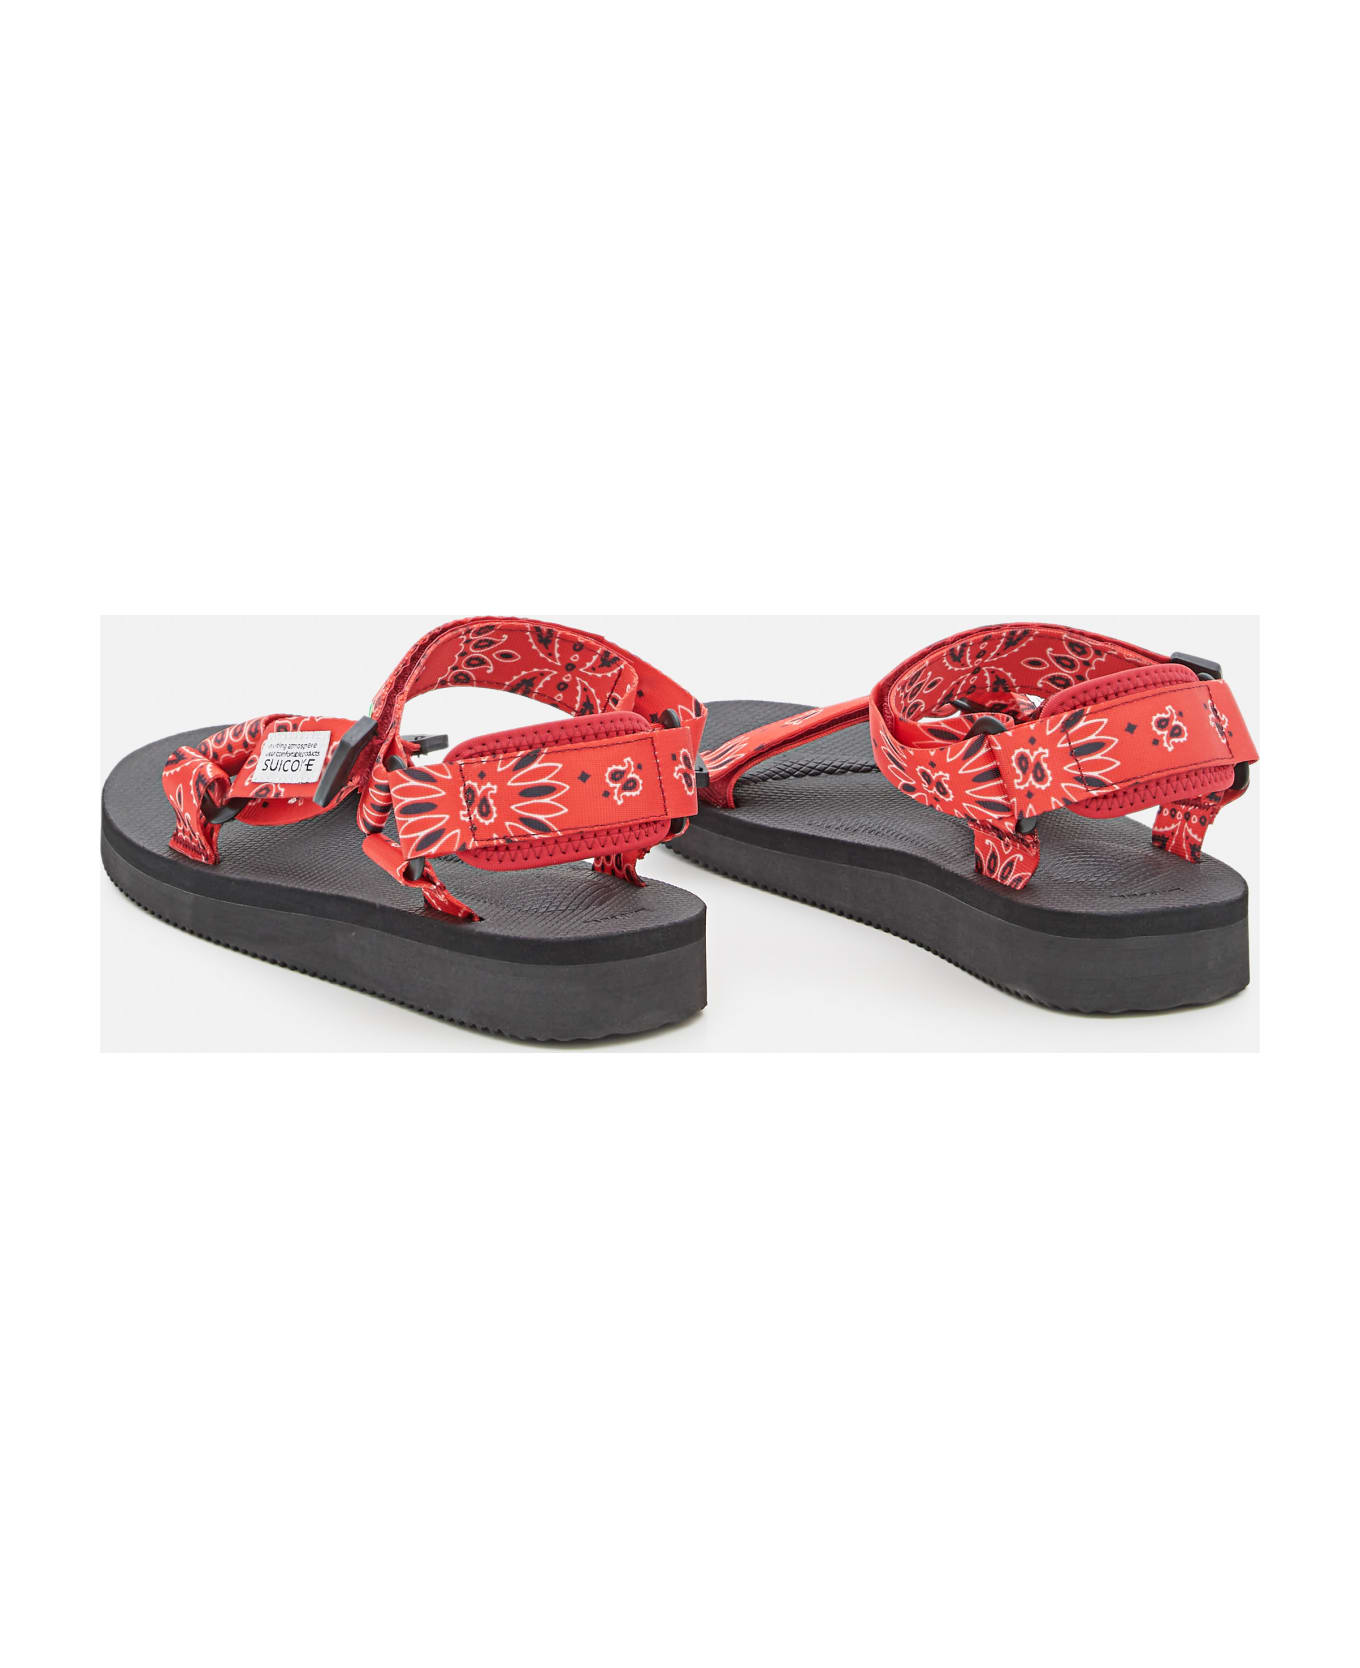 SUICOKE Depa Sandals - Red